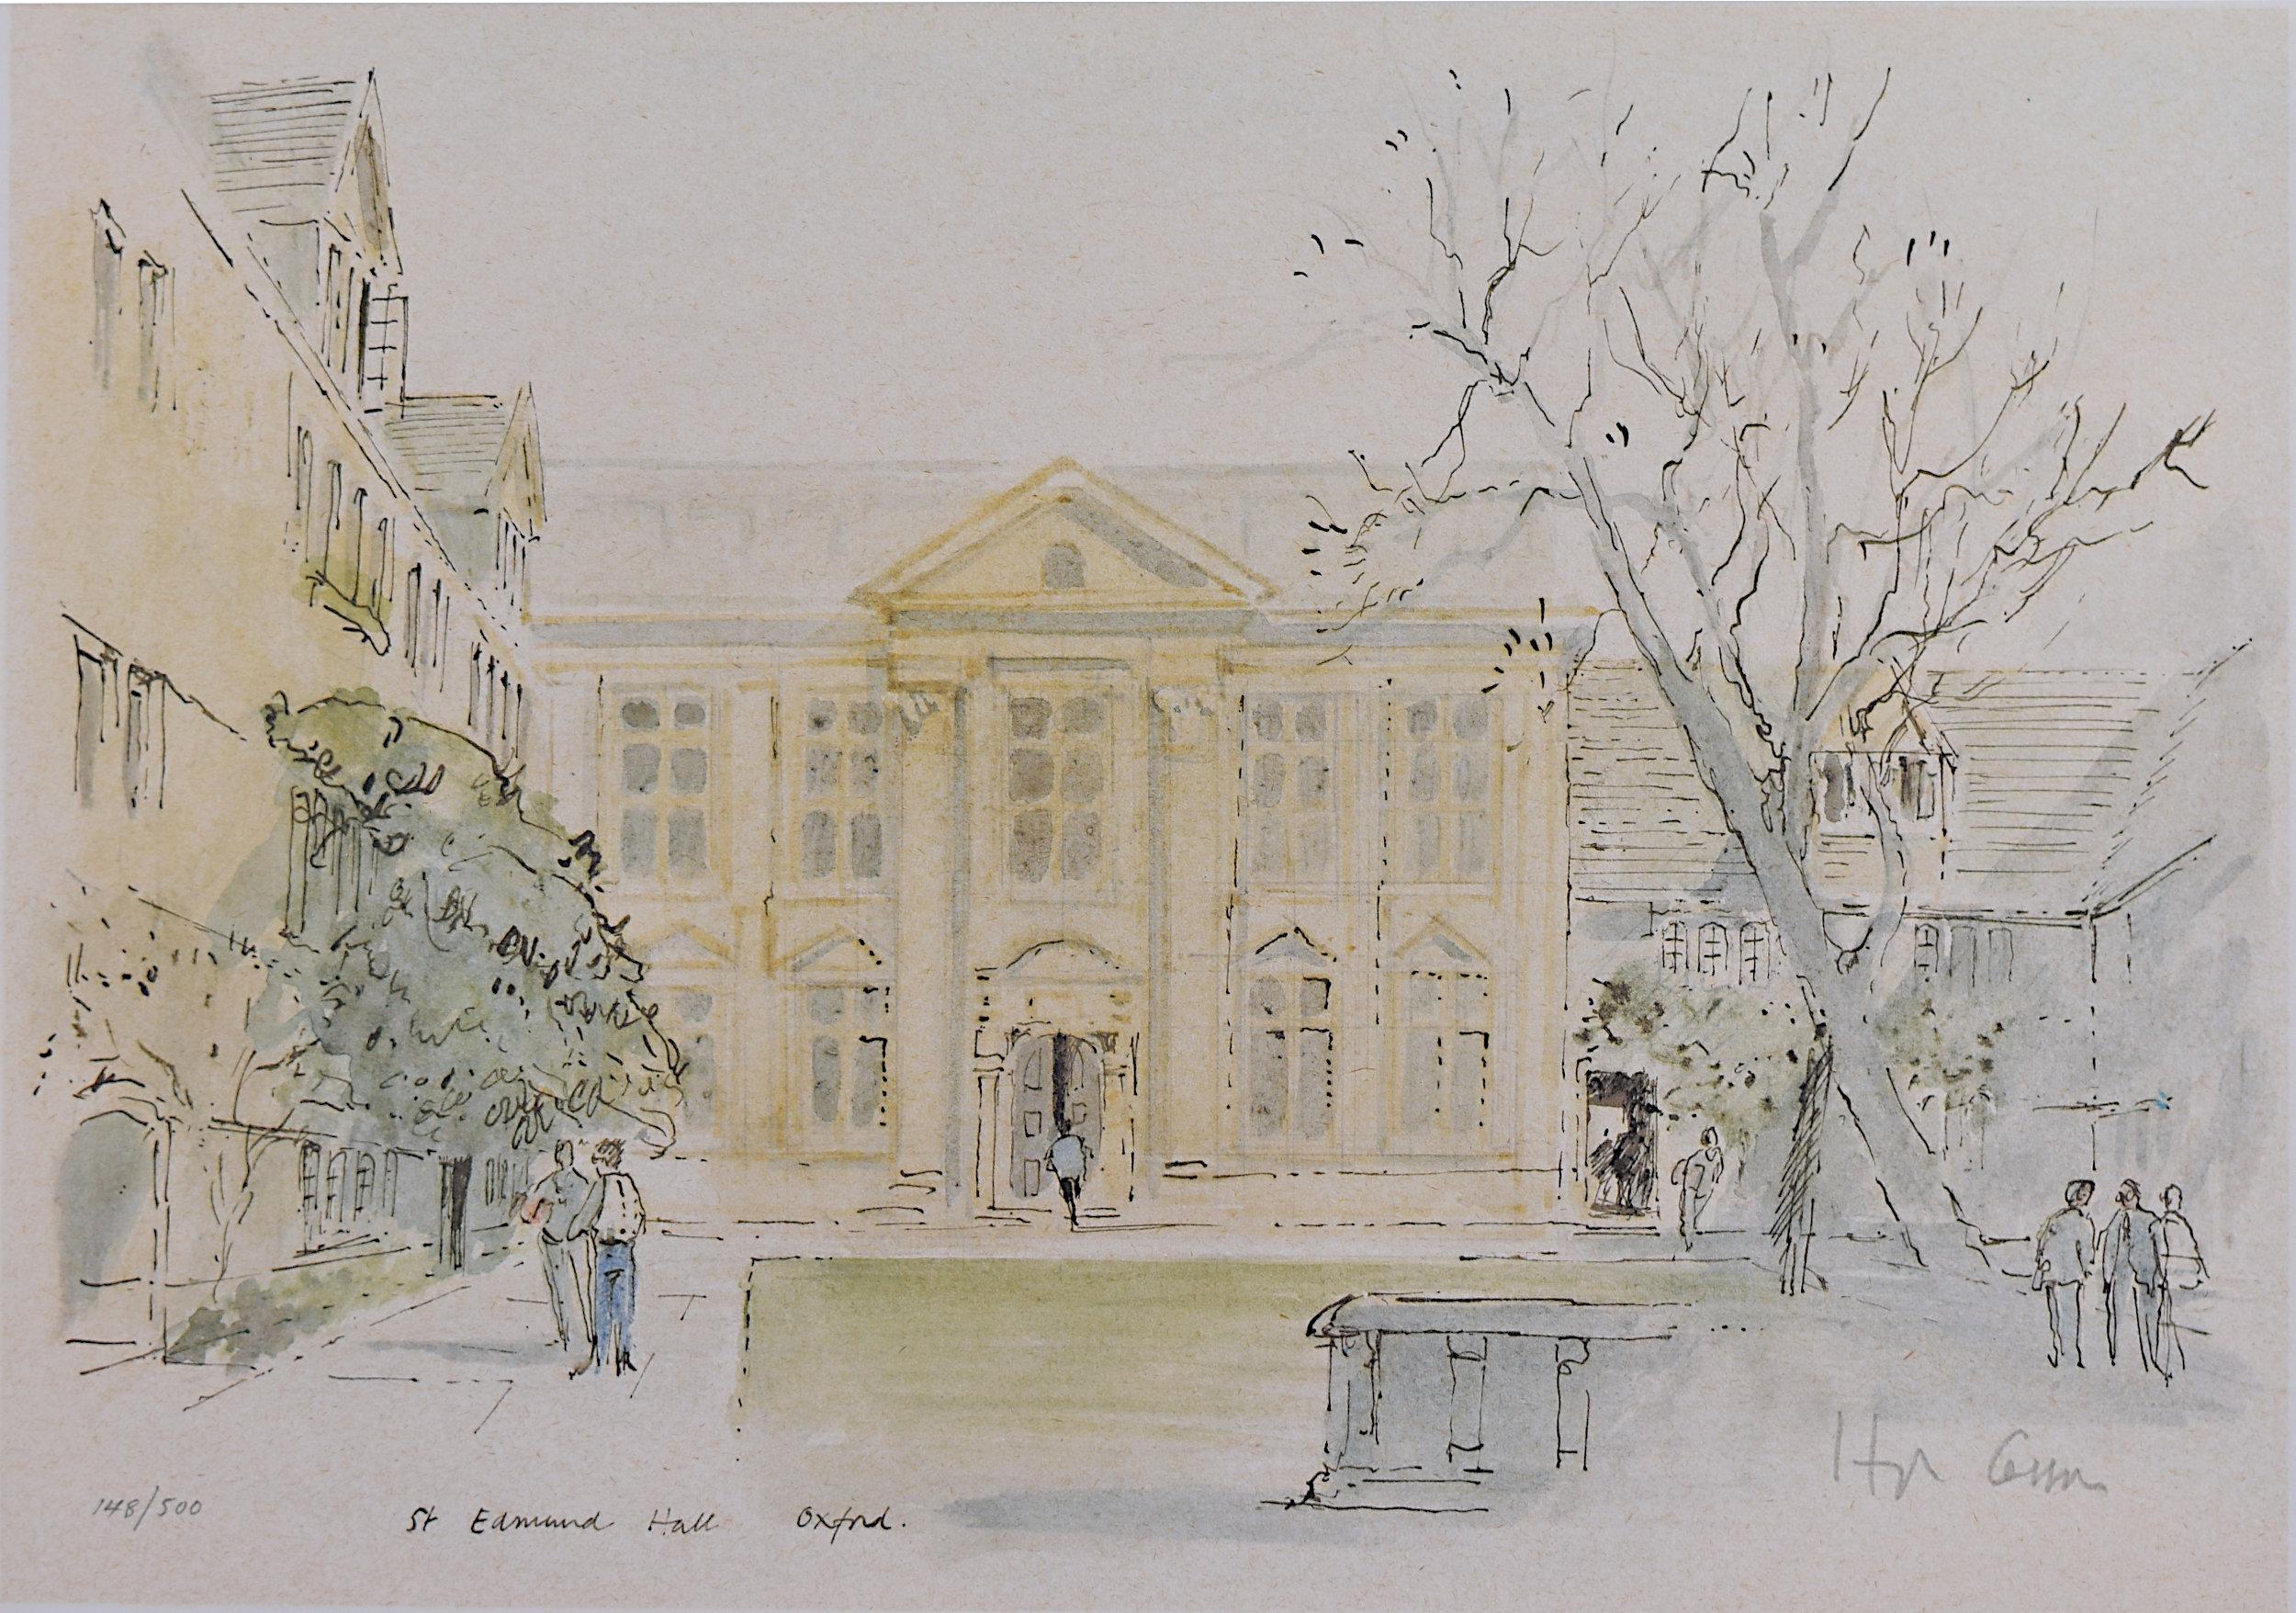 Hugh Casson St Edmund Hall, Oxford signed limited edition print